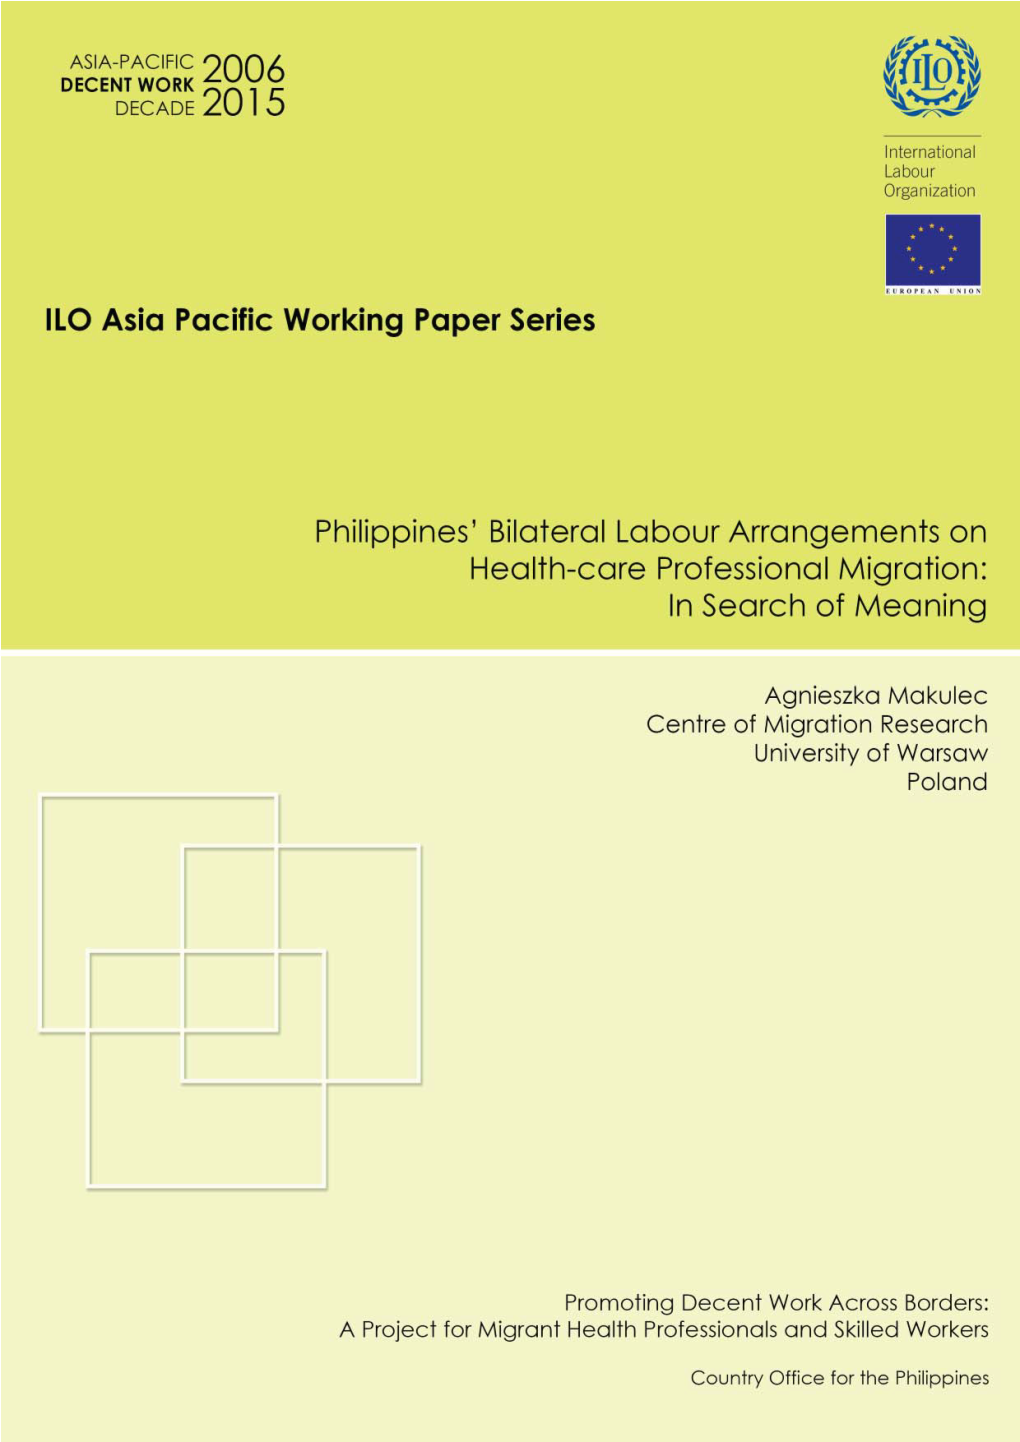 Philippines' Bilateral Labour Arrangements on Health-Care Professional Migration